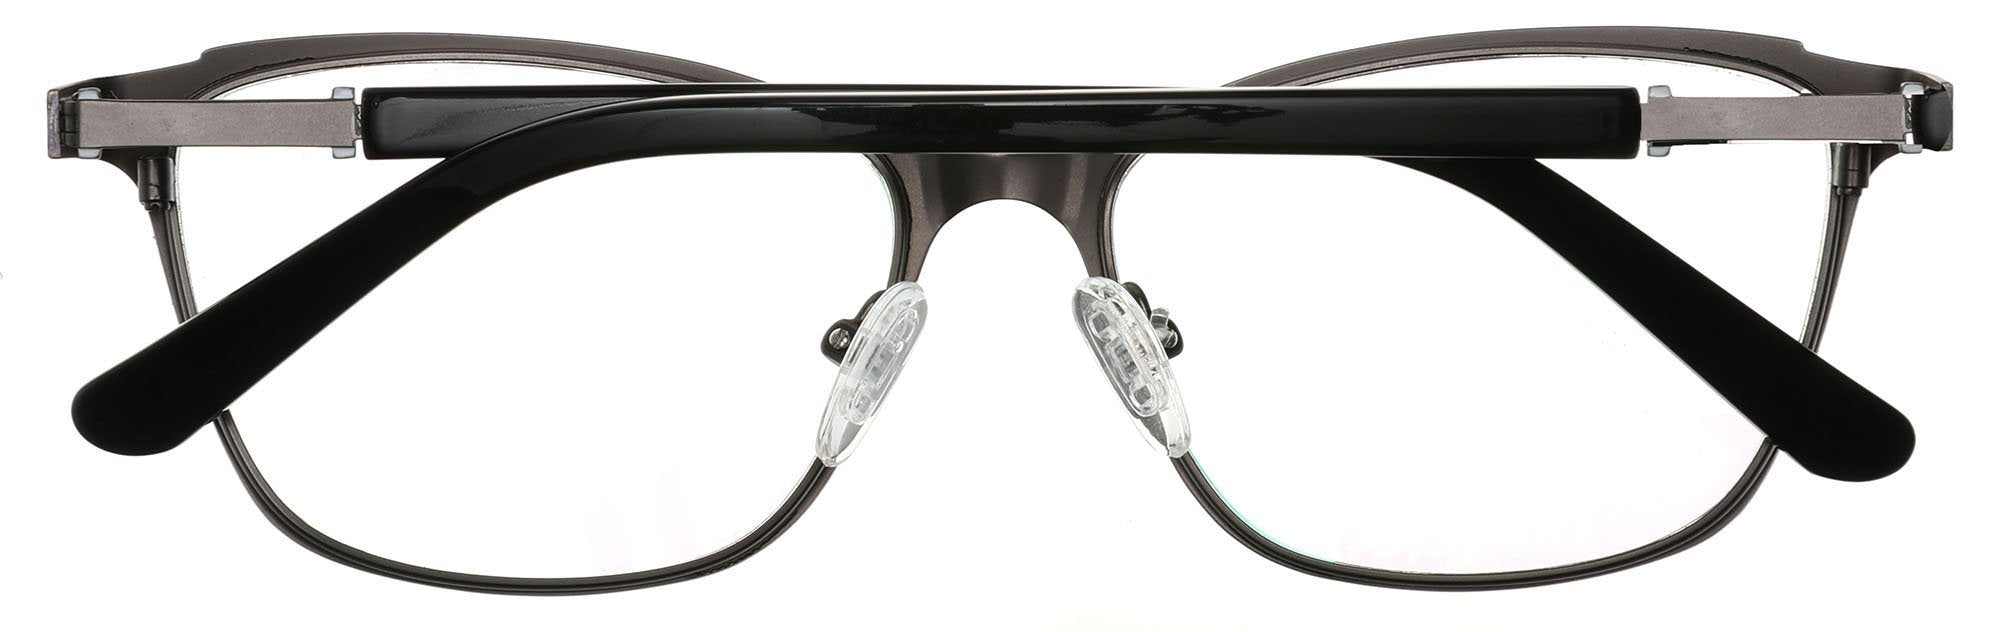 Tango Optics Browline Metal Eyeglasses Frame Luxe Rx Stainless Steel C Samba Shades